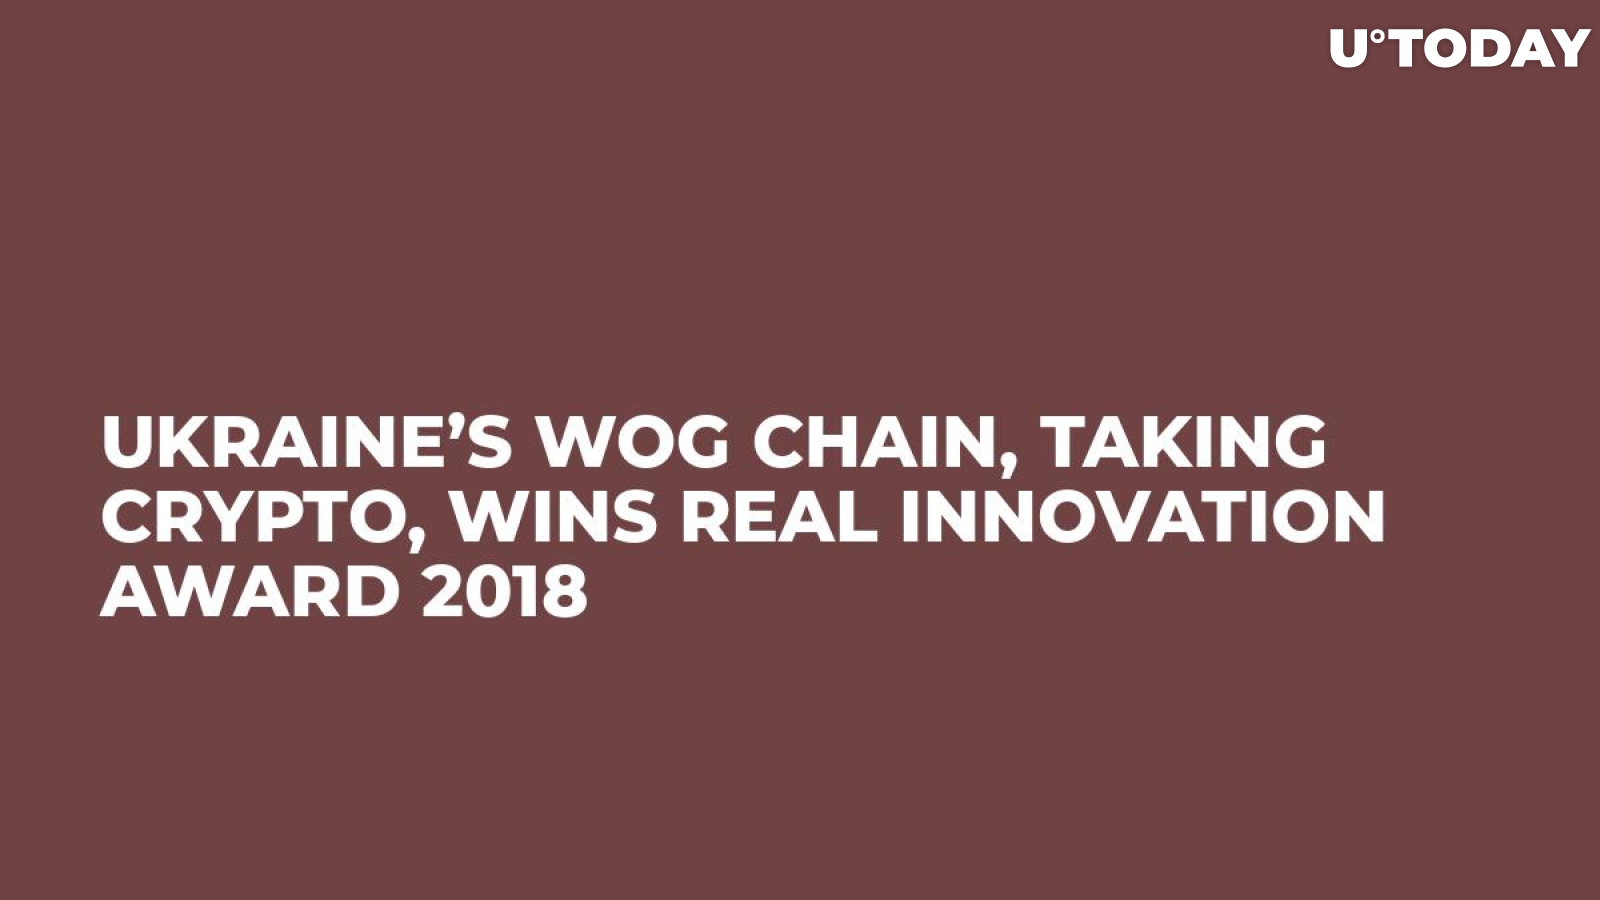 Ukraine’s WOG Chain, Taking Crypto, Wins Real Innovation Award 2018